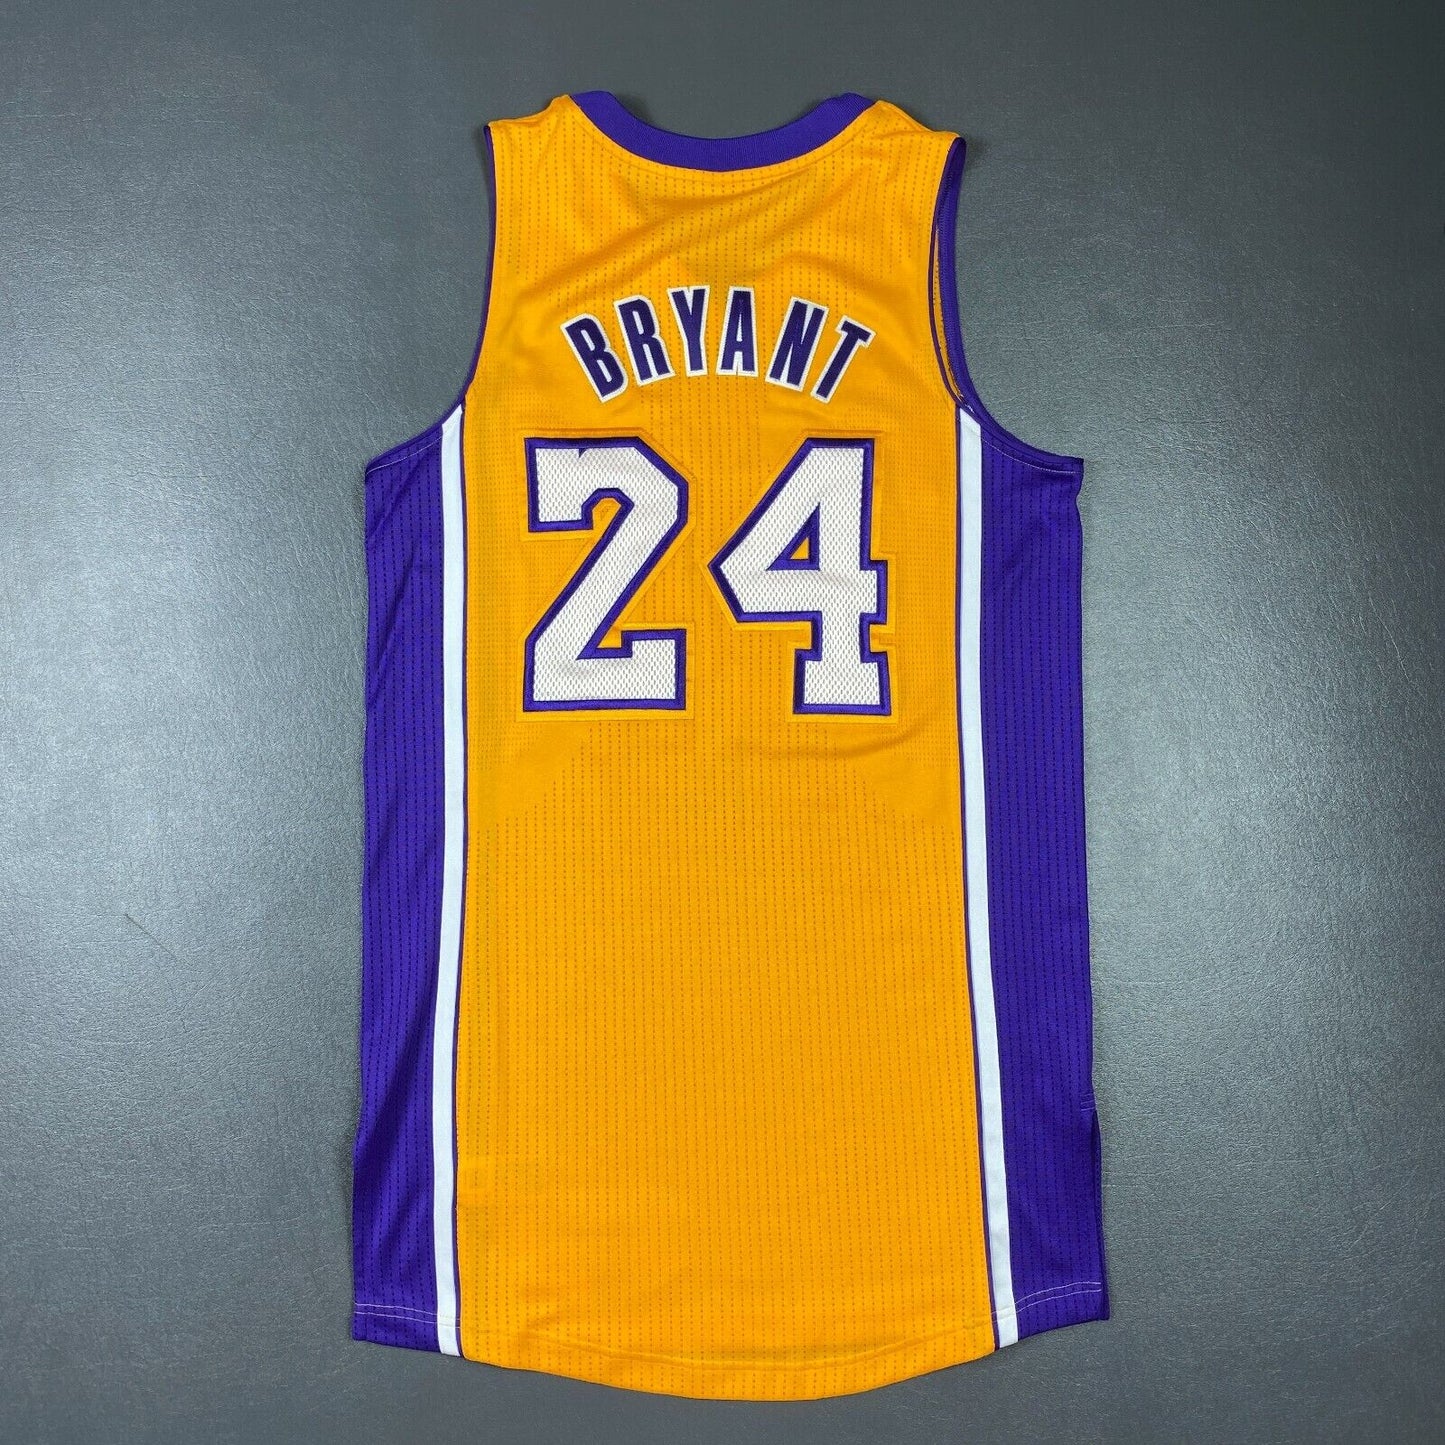 100% Authentic Kobe Bryant 2010 2011 Lakers Jersey Size M 40 Mens Pro Cut Mesh #